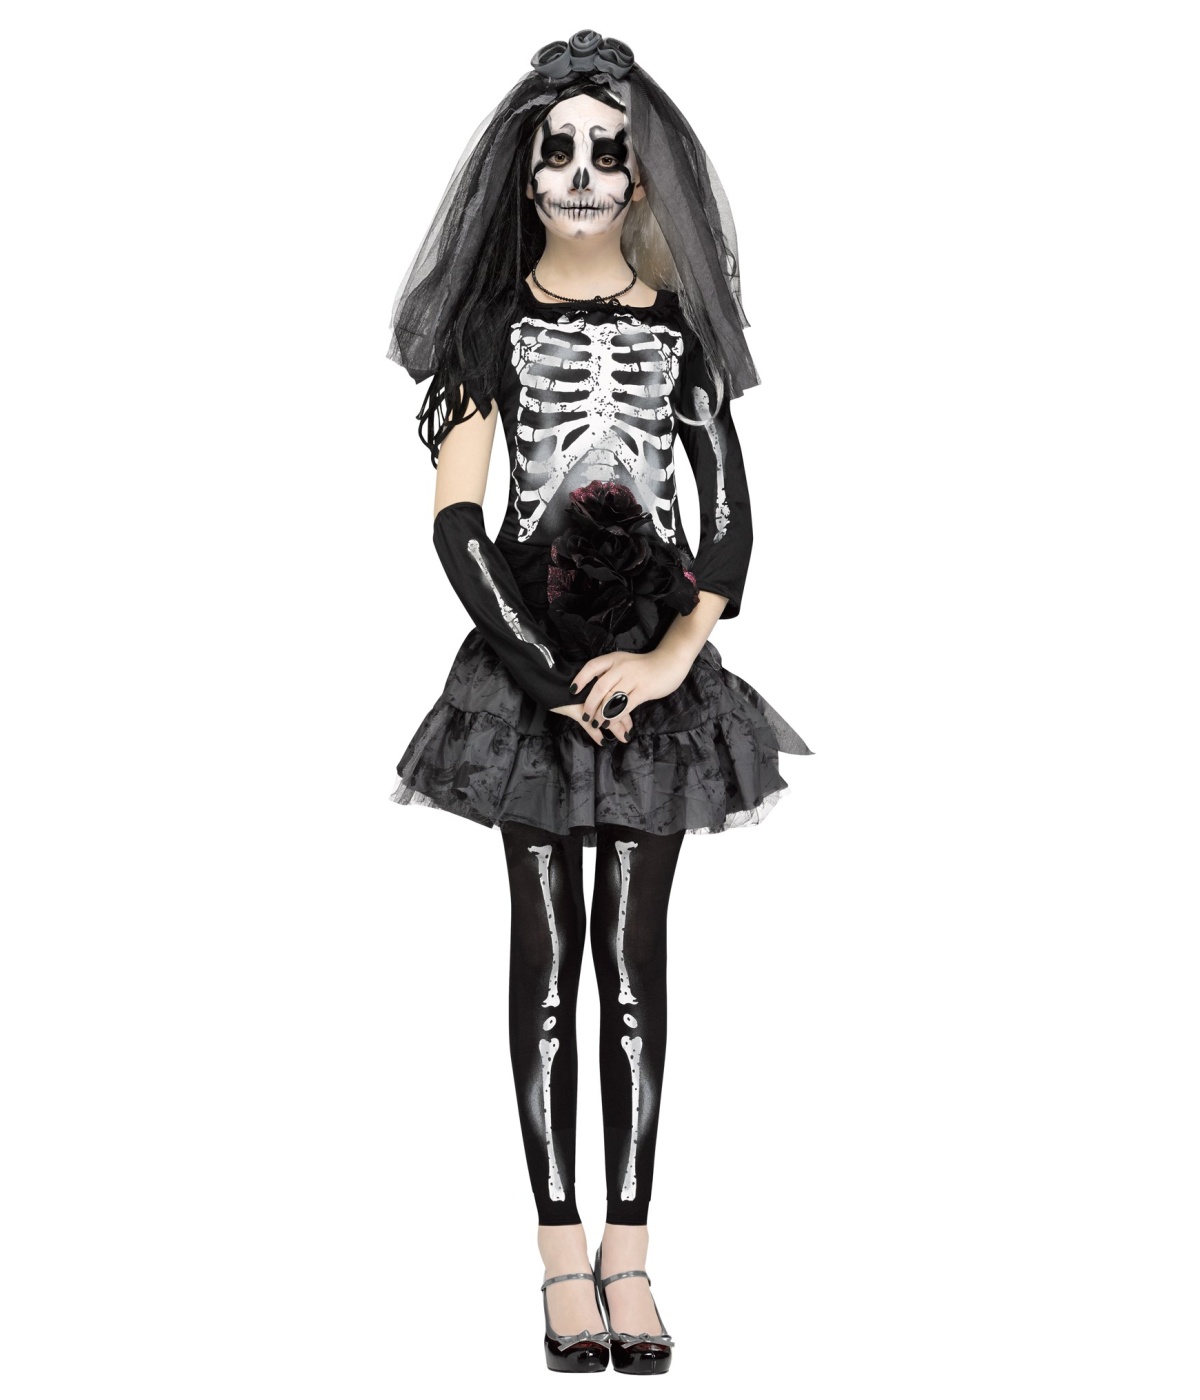  Ghastly Skeleton Bride Costume